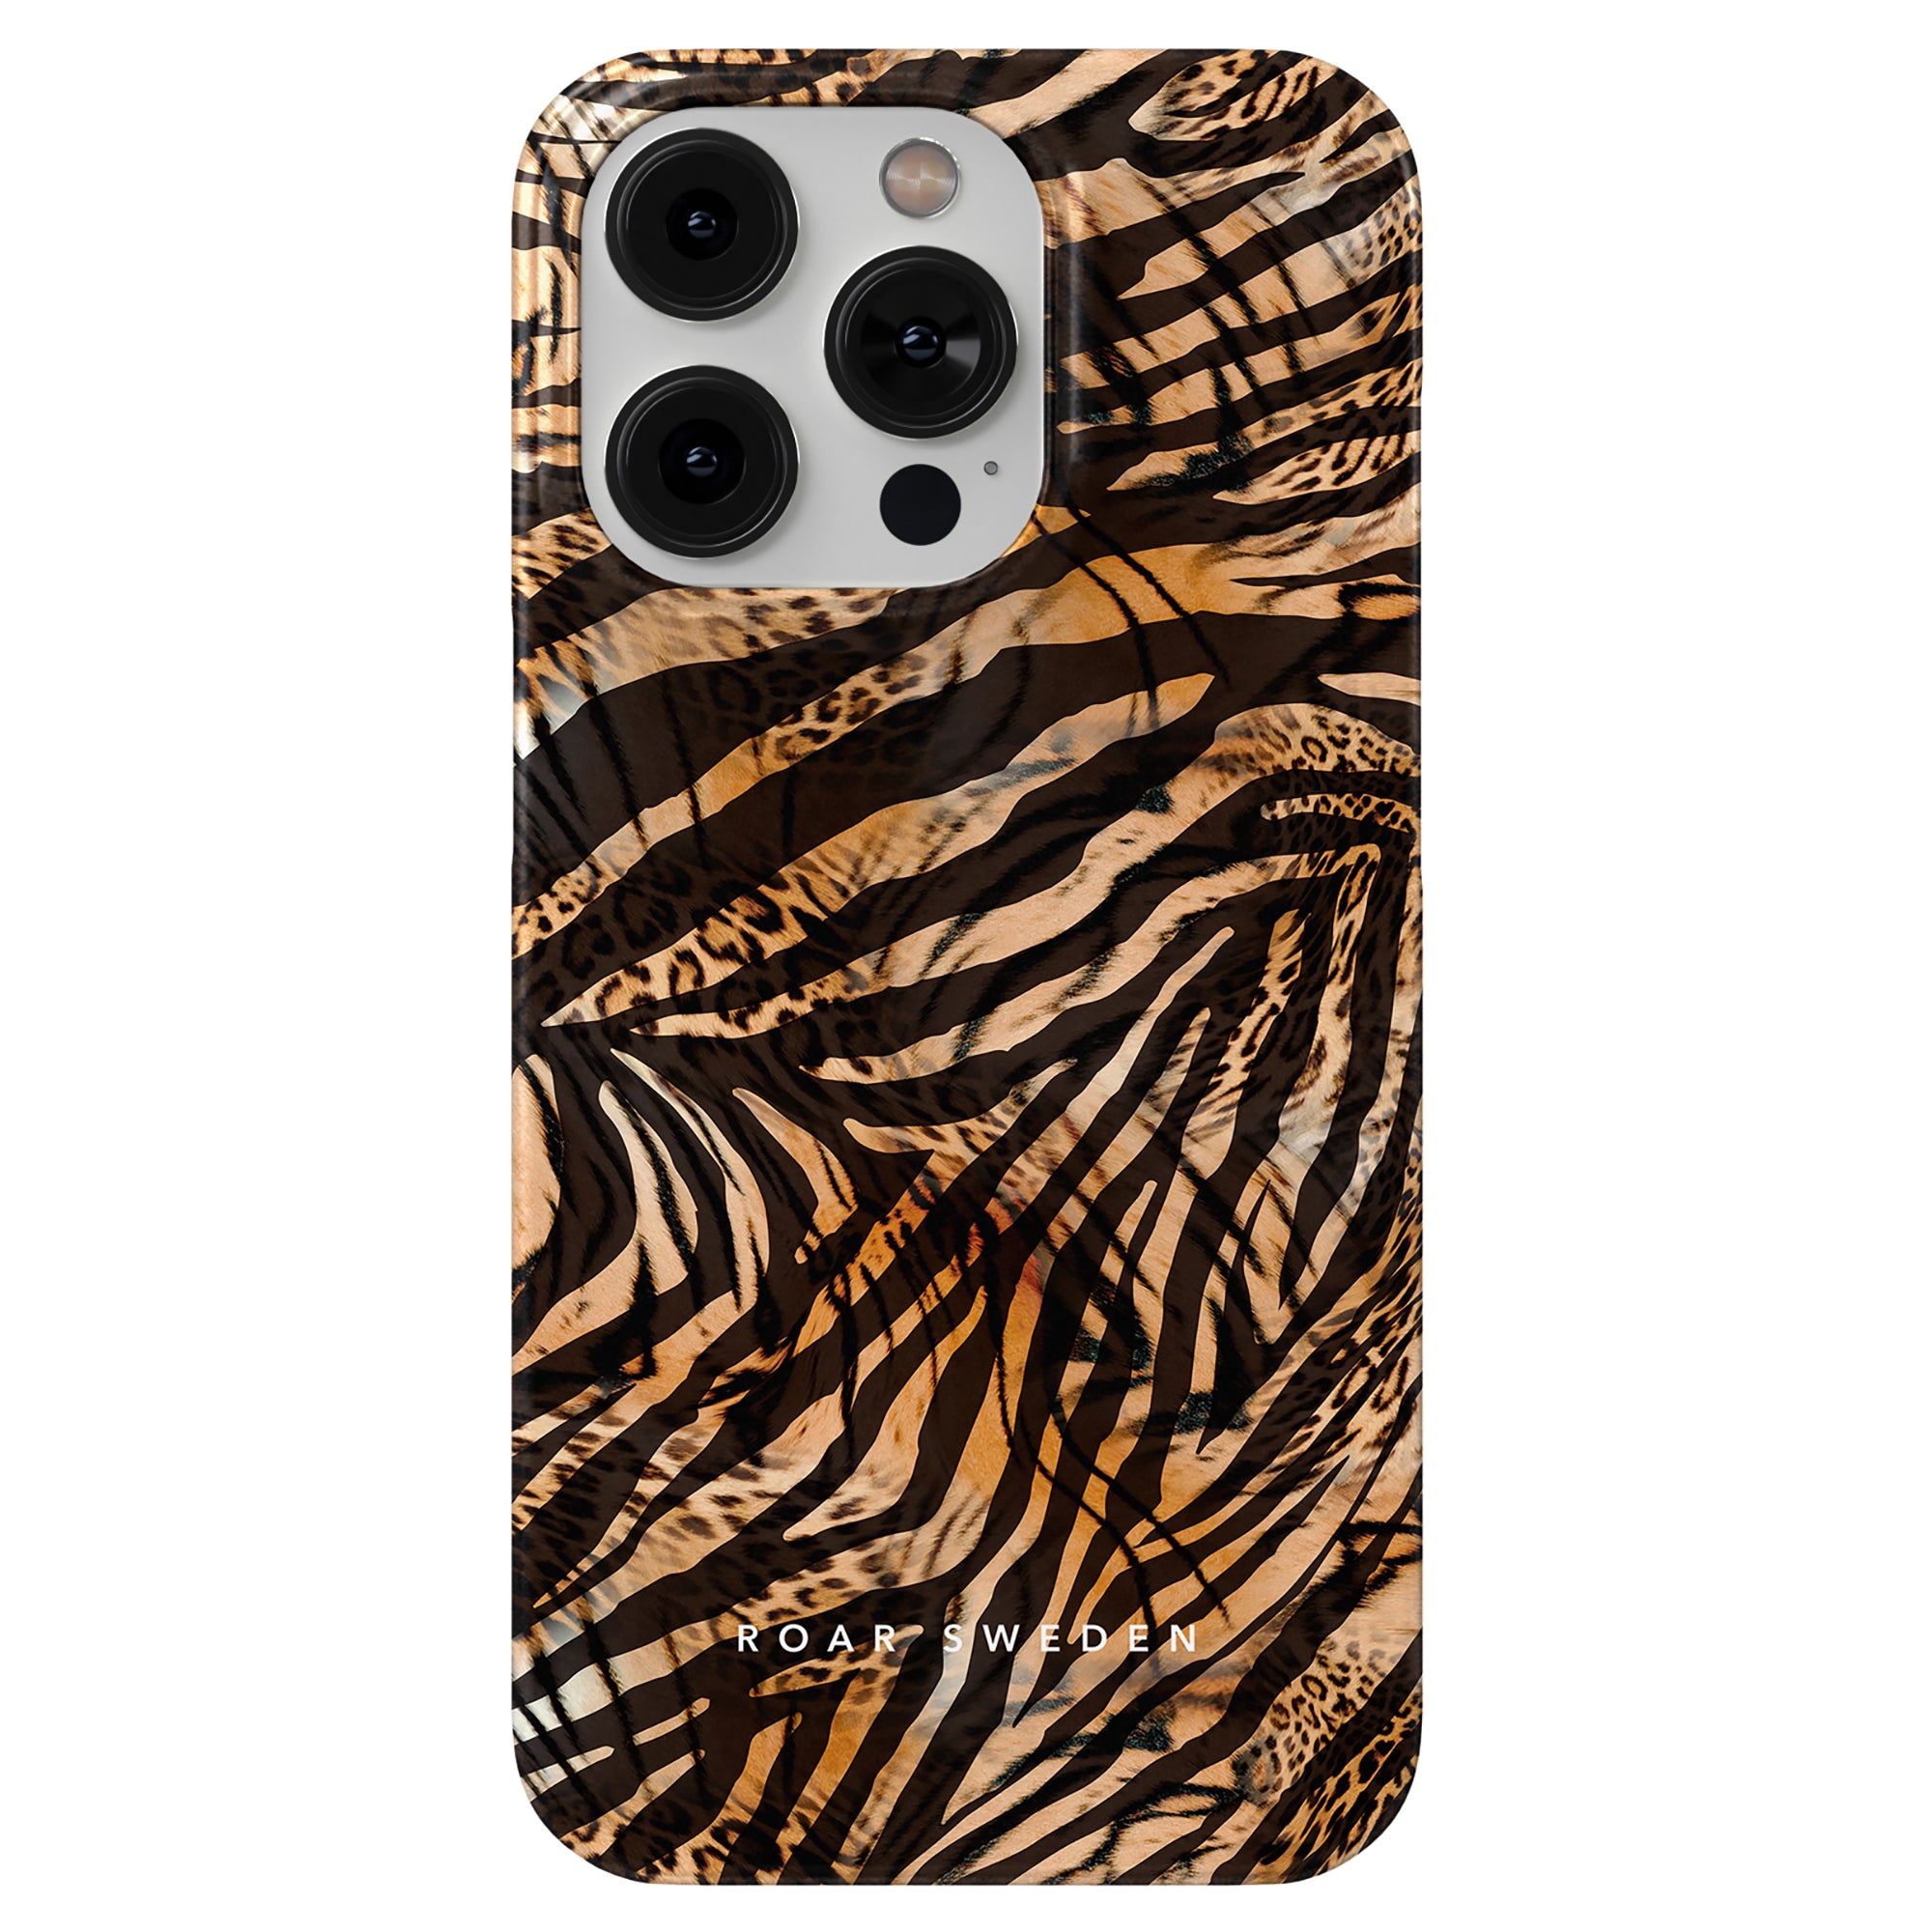 A Fierce - Slim case zebra print mobilskal för iphone 11.